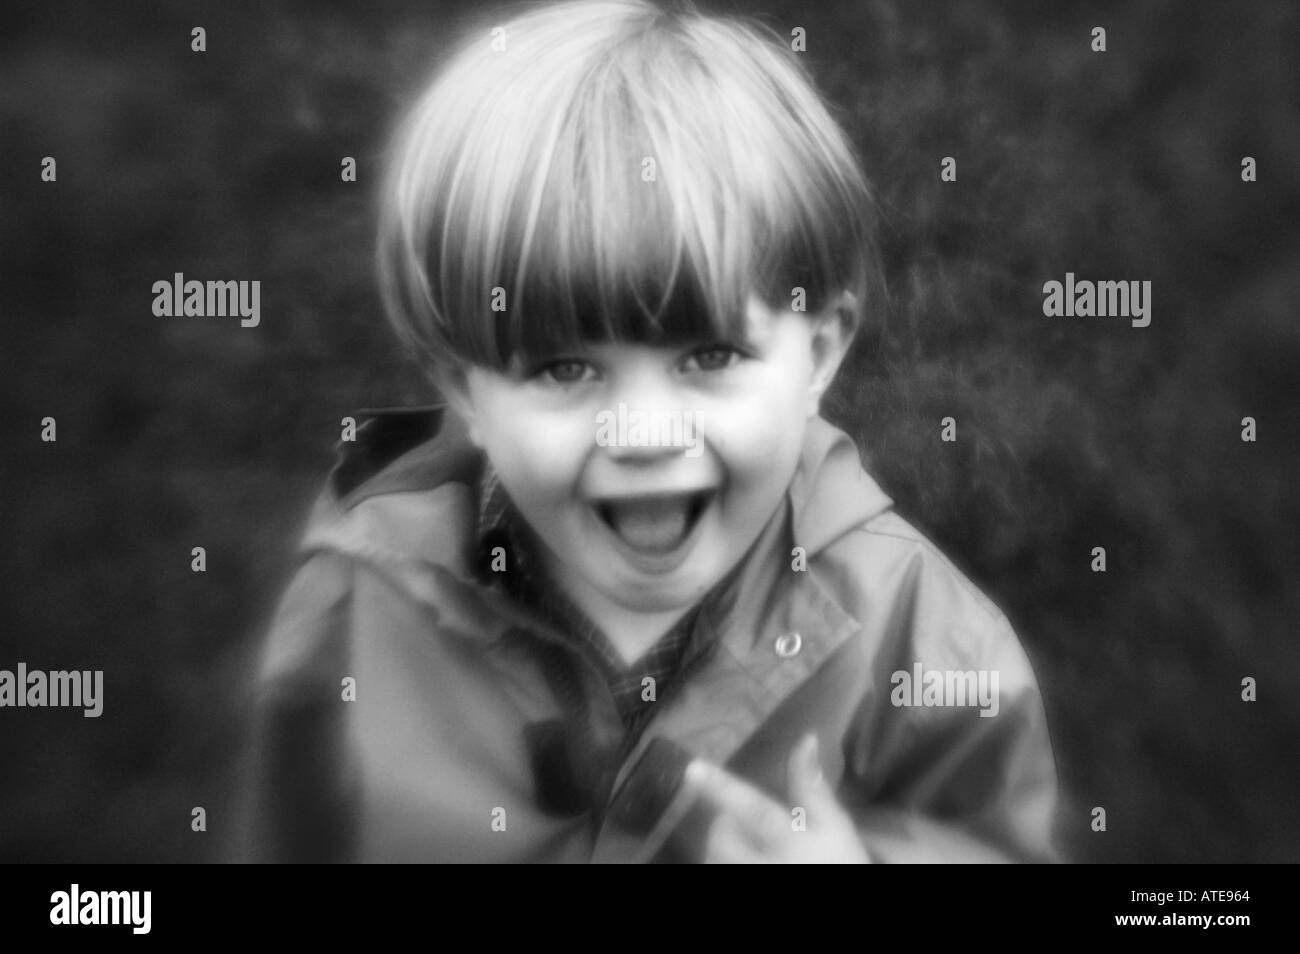 Cute kid smiling face looking at camera Stock Photo